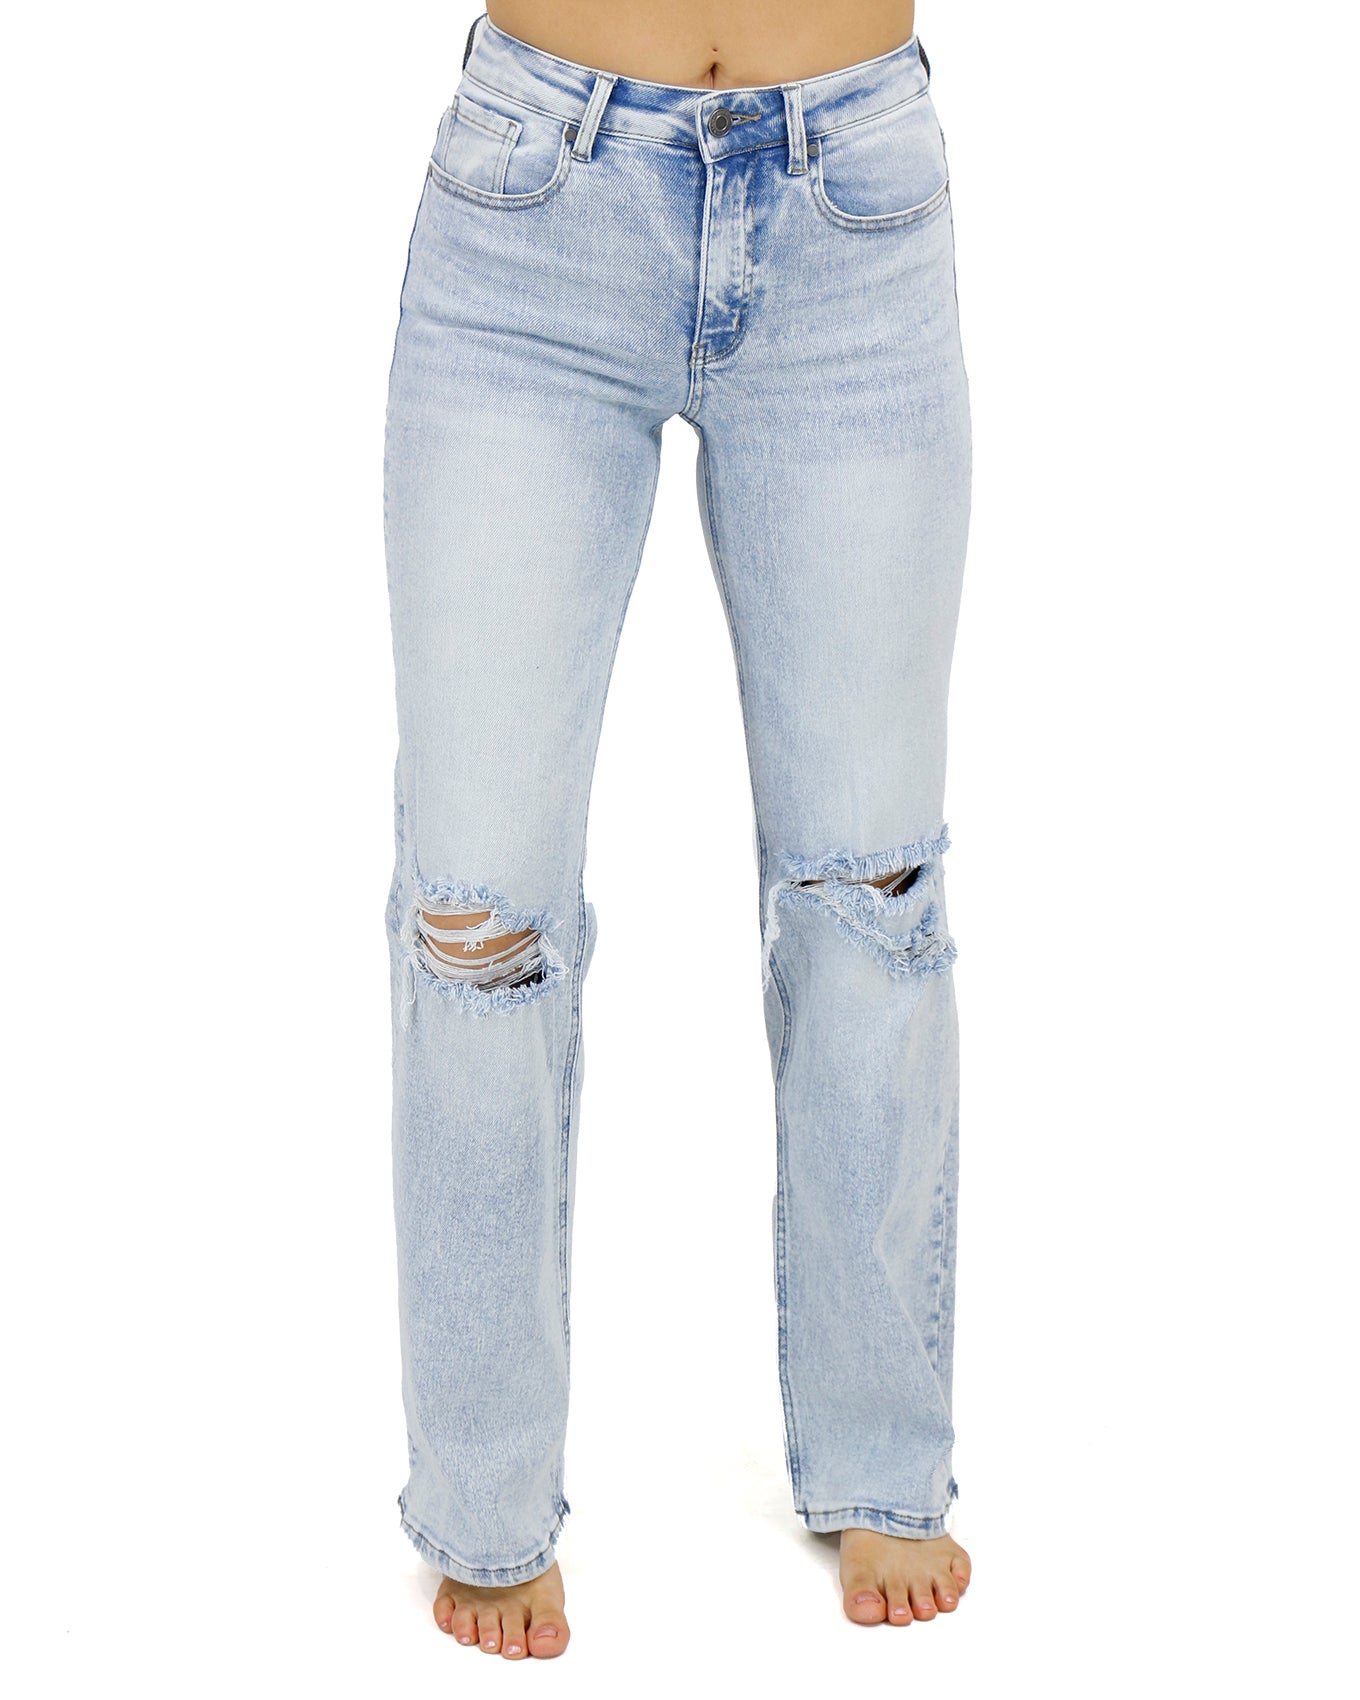 Light Grey Denim SLTessie Jeans from Soaked in Luxury – Buy Light